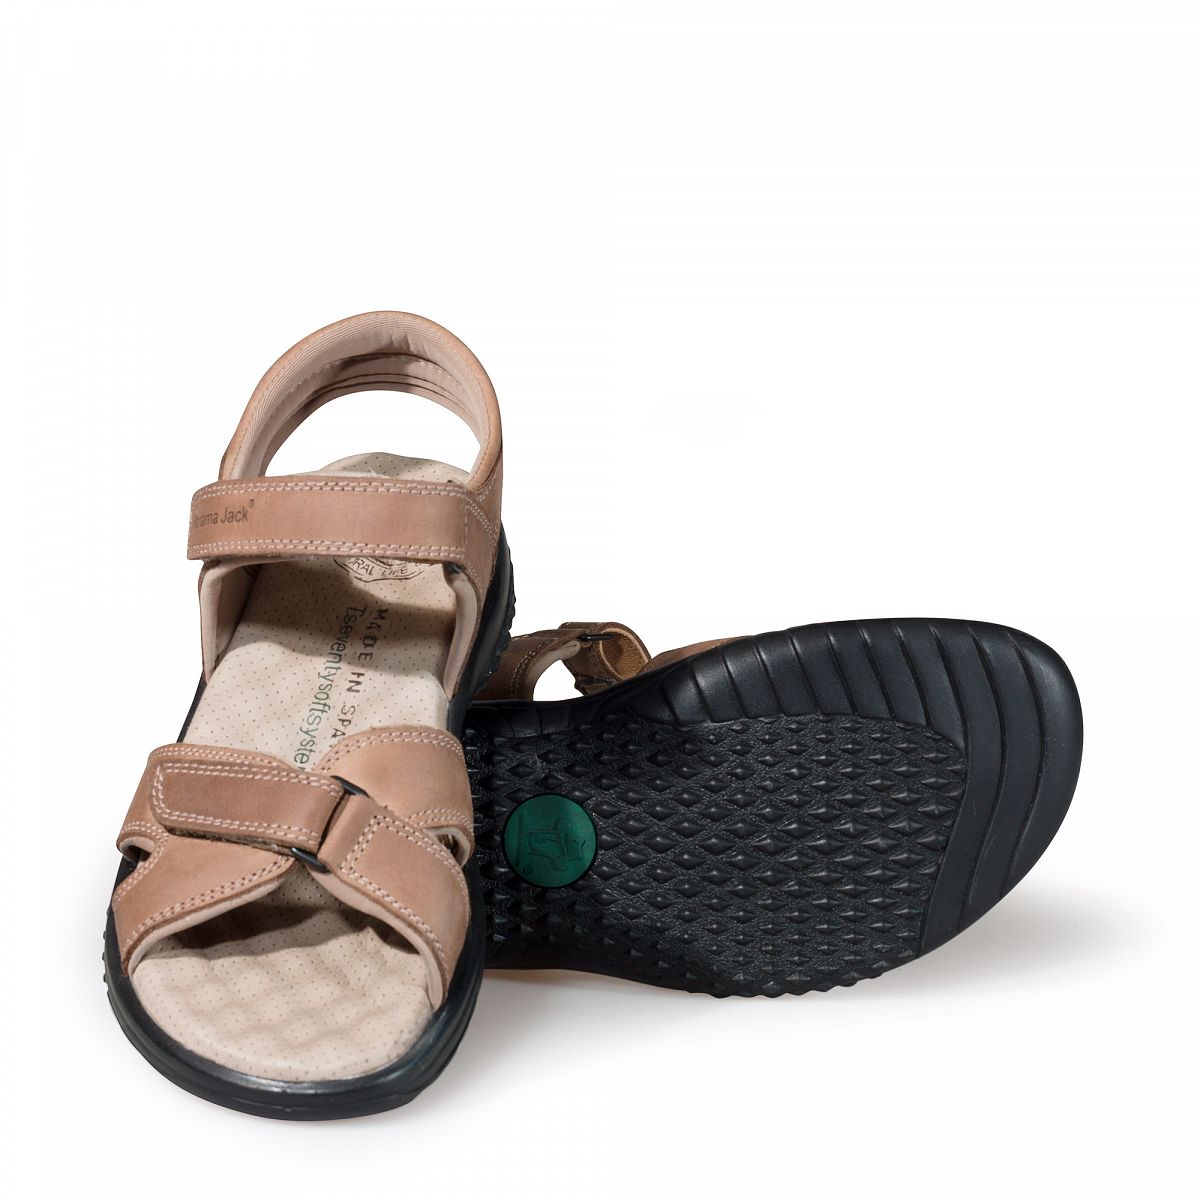 Women's sandals NIAGARA taupe | PANAMA JACK Official Online Shop